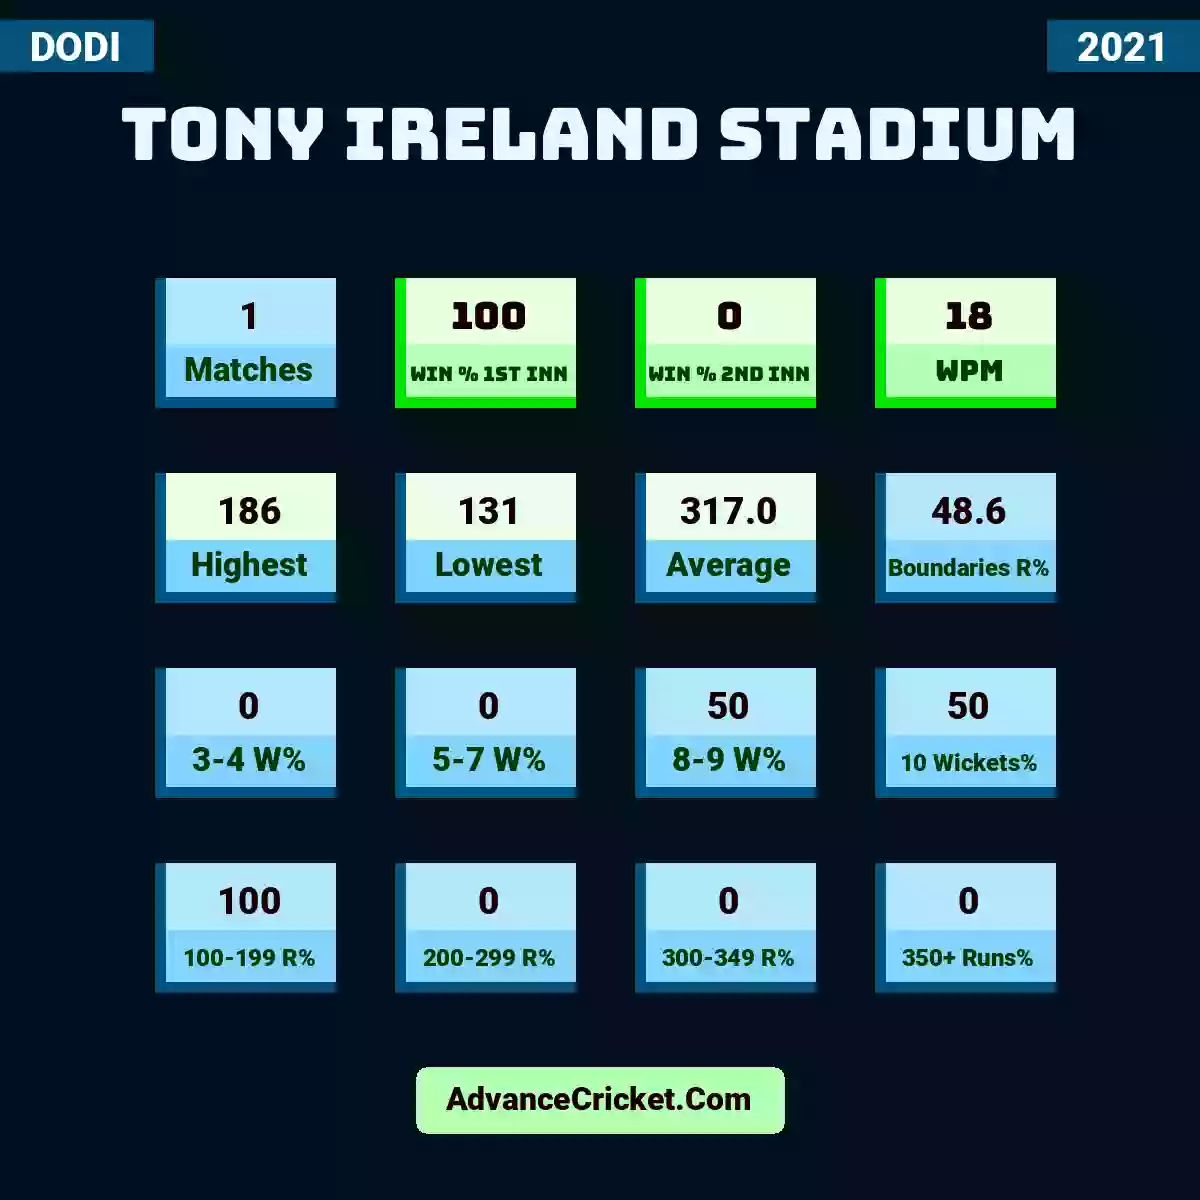 Image showing Tony Ireland Stadium with Matches: 1, Win % 1st Inn: 100, Win % 2nd Inn: 0, WPM: 18, Highest: 186, Lowest: 131, Average: 317.0, Boundaries R%: 48.6, 3-4 W%: 0, 5-7 W%: 0, 8-9 W%: 50, 10 Wickets%: 50, 100-199 R%: 100, 200-299 R%: 0, 300-349 R%: 0, 350+ Runs%: 0.